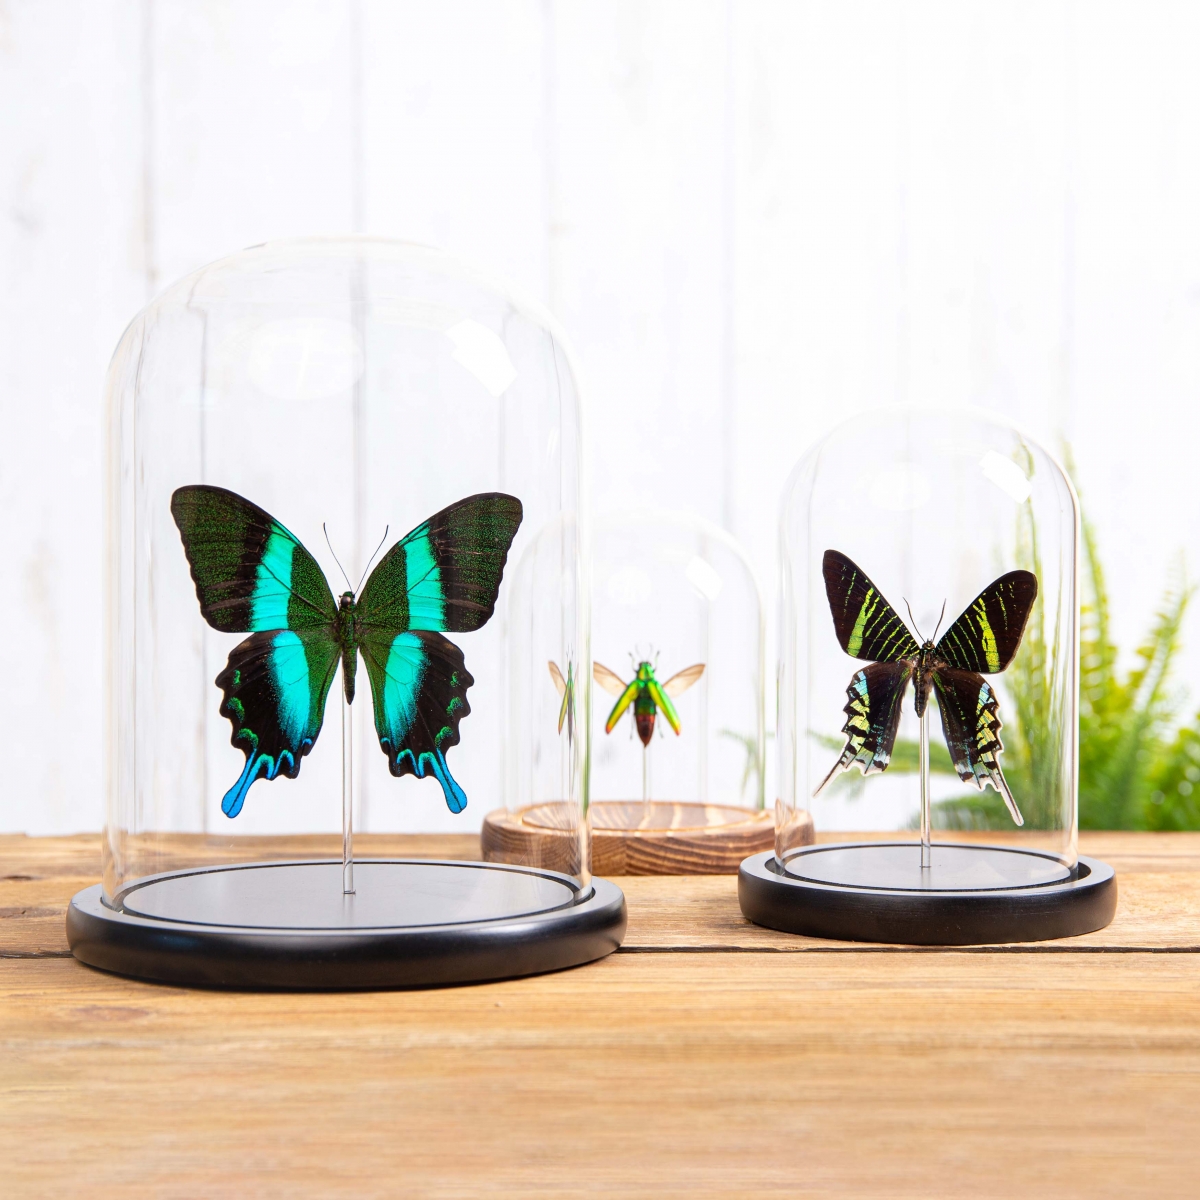 Aega Morpho Butterfly in Glass Dome with Wooden Base (Morpho aega)